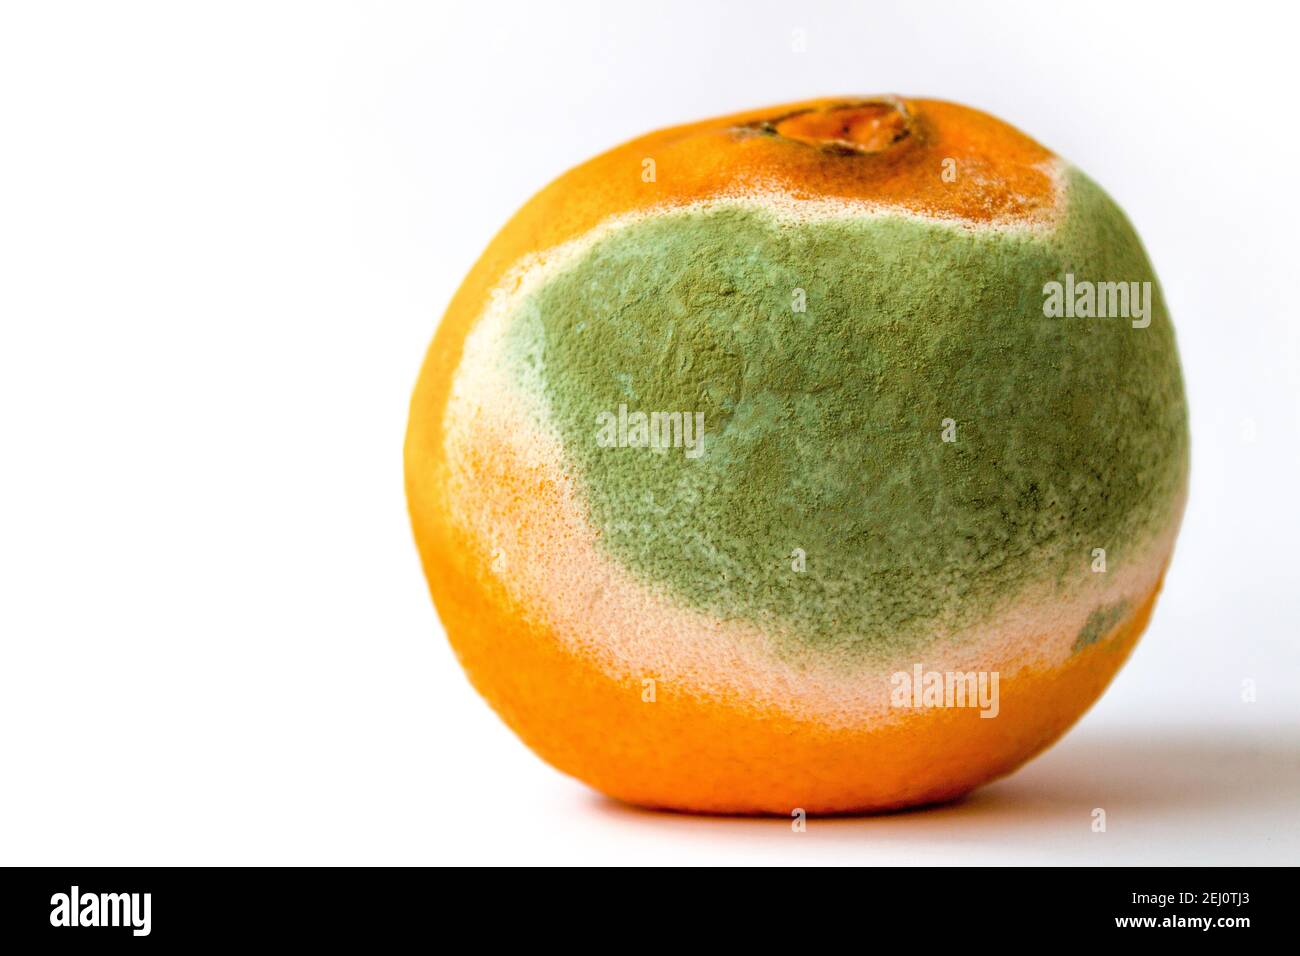 https://c8.alamy.com/comp/2EJ0TJ3/rotten-orange-with-mold-on-light-background-close-up-ugly-food-consept-expired-fruit-2EJ0TJ3.jpg